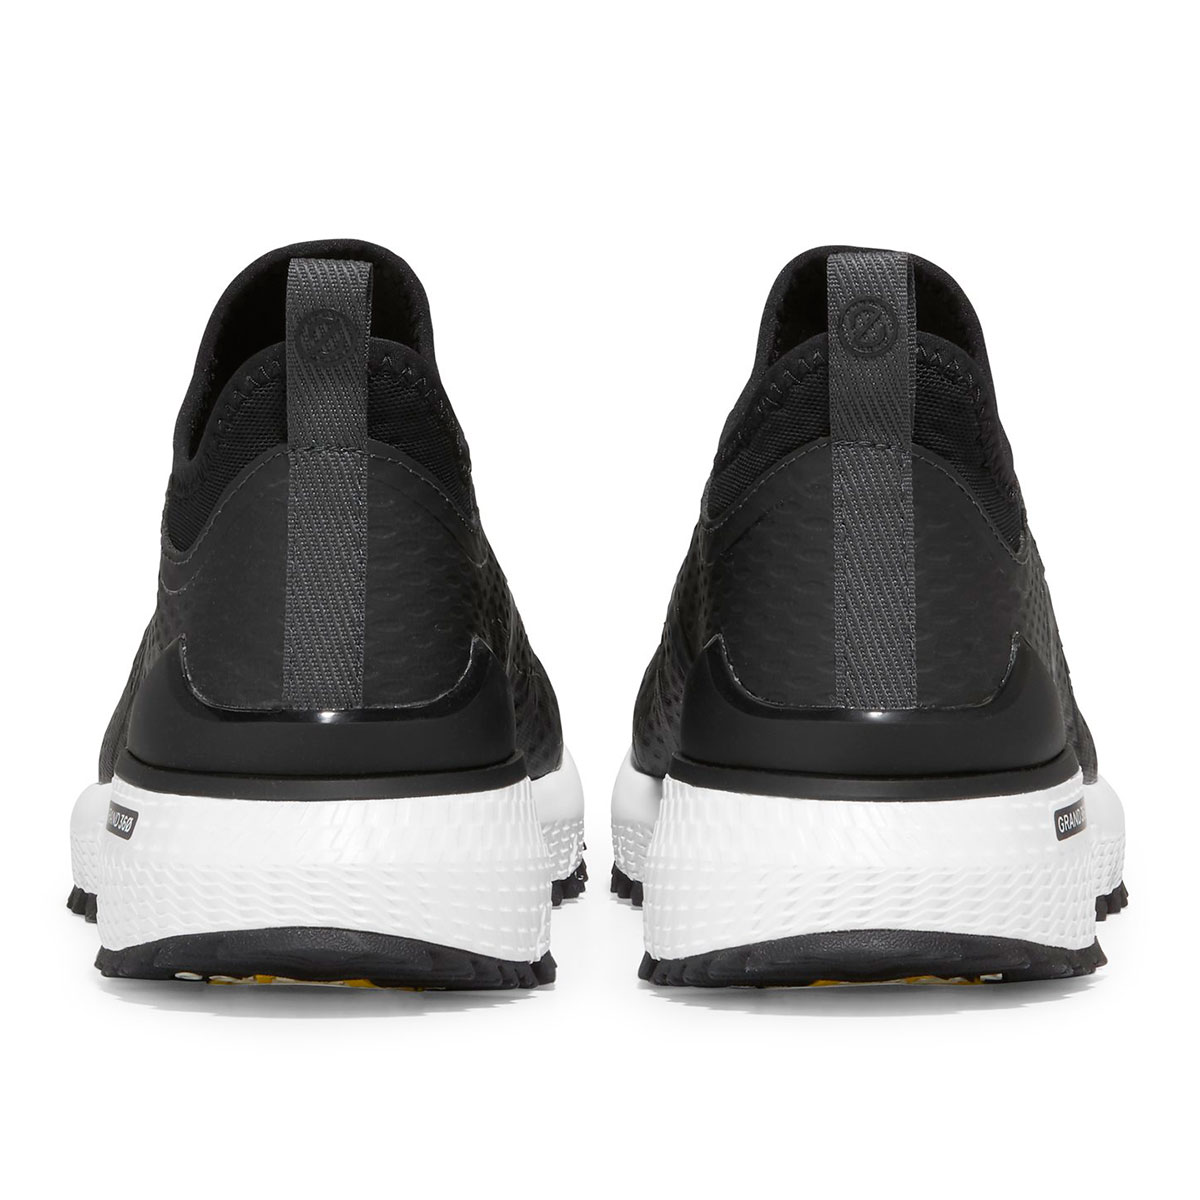 Cole Haan Men's ZeroGrand Overtake Waterproof Spikeless Golf Shoes from